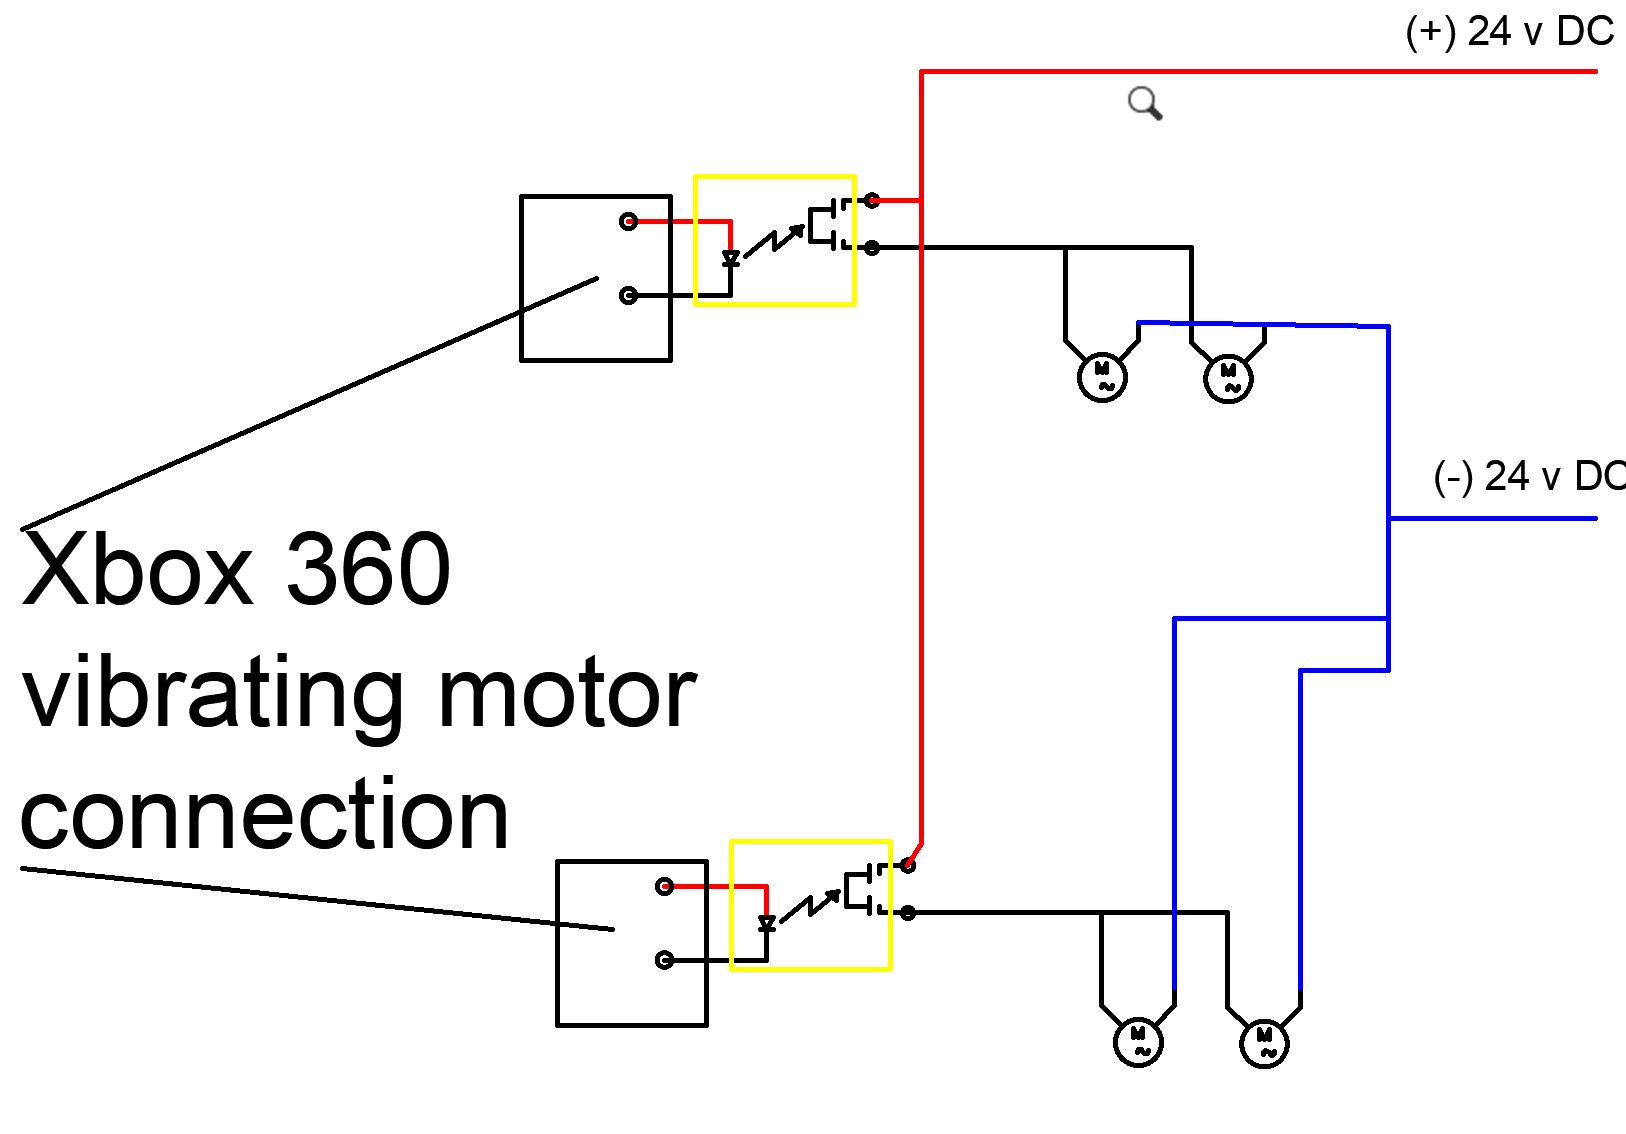 Bedrading schema elektra installatie2.JPG